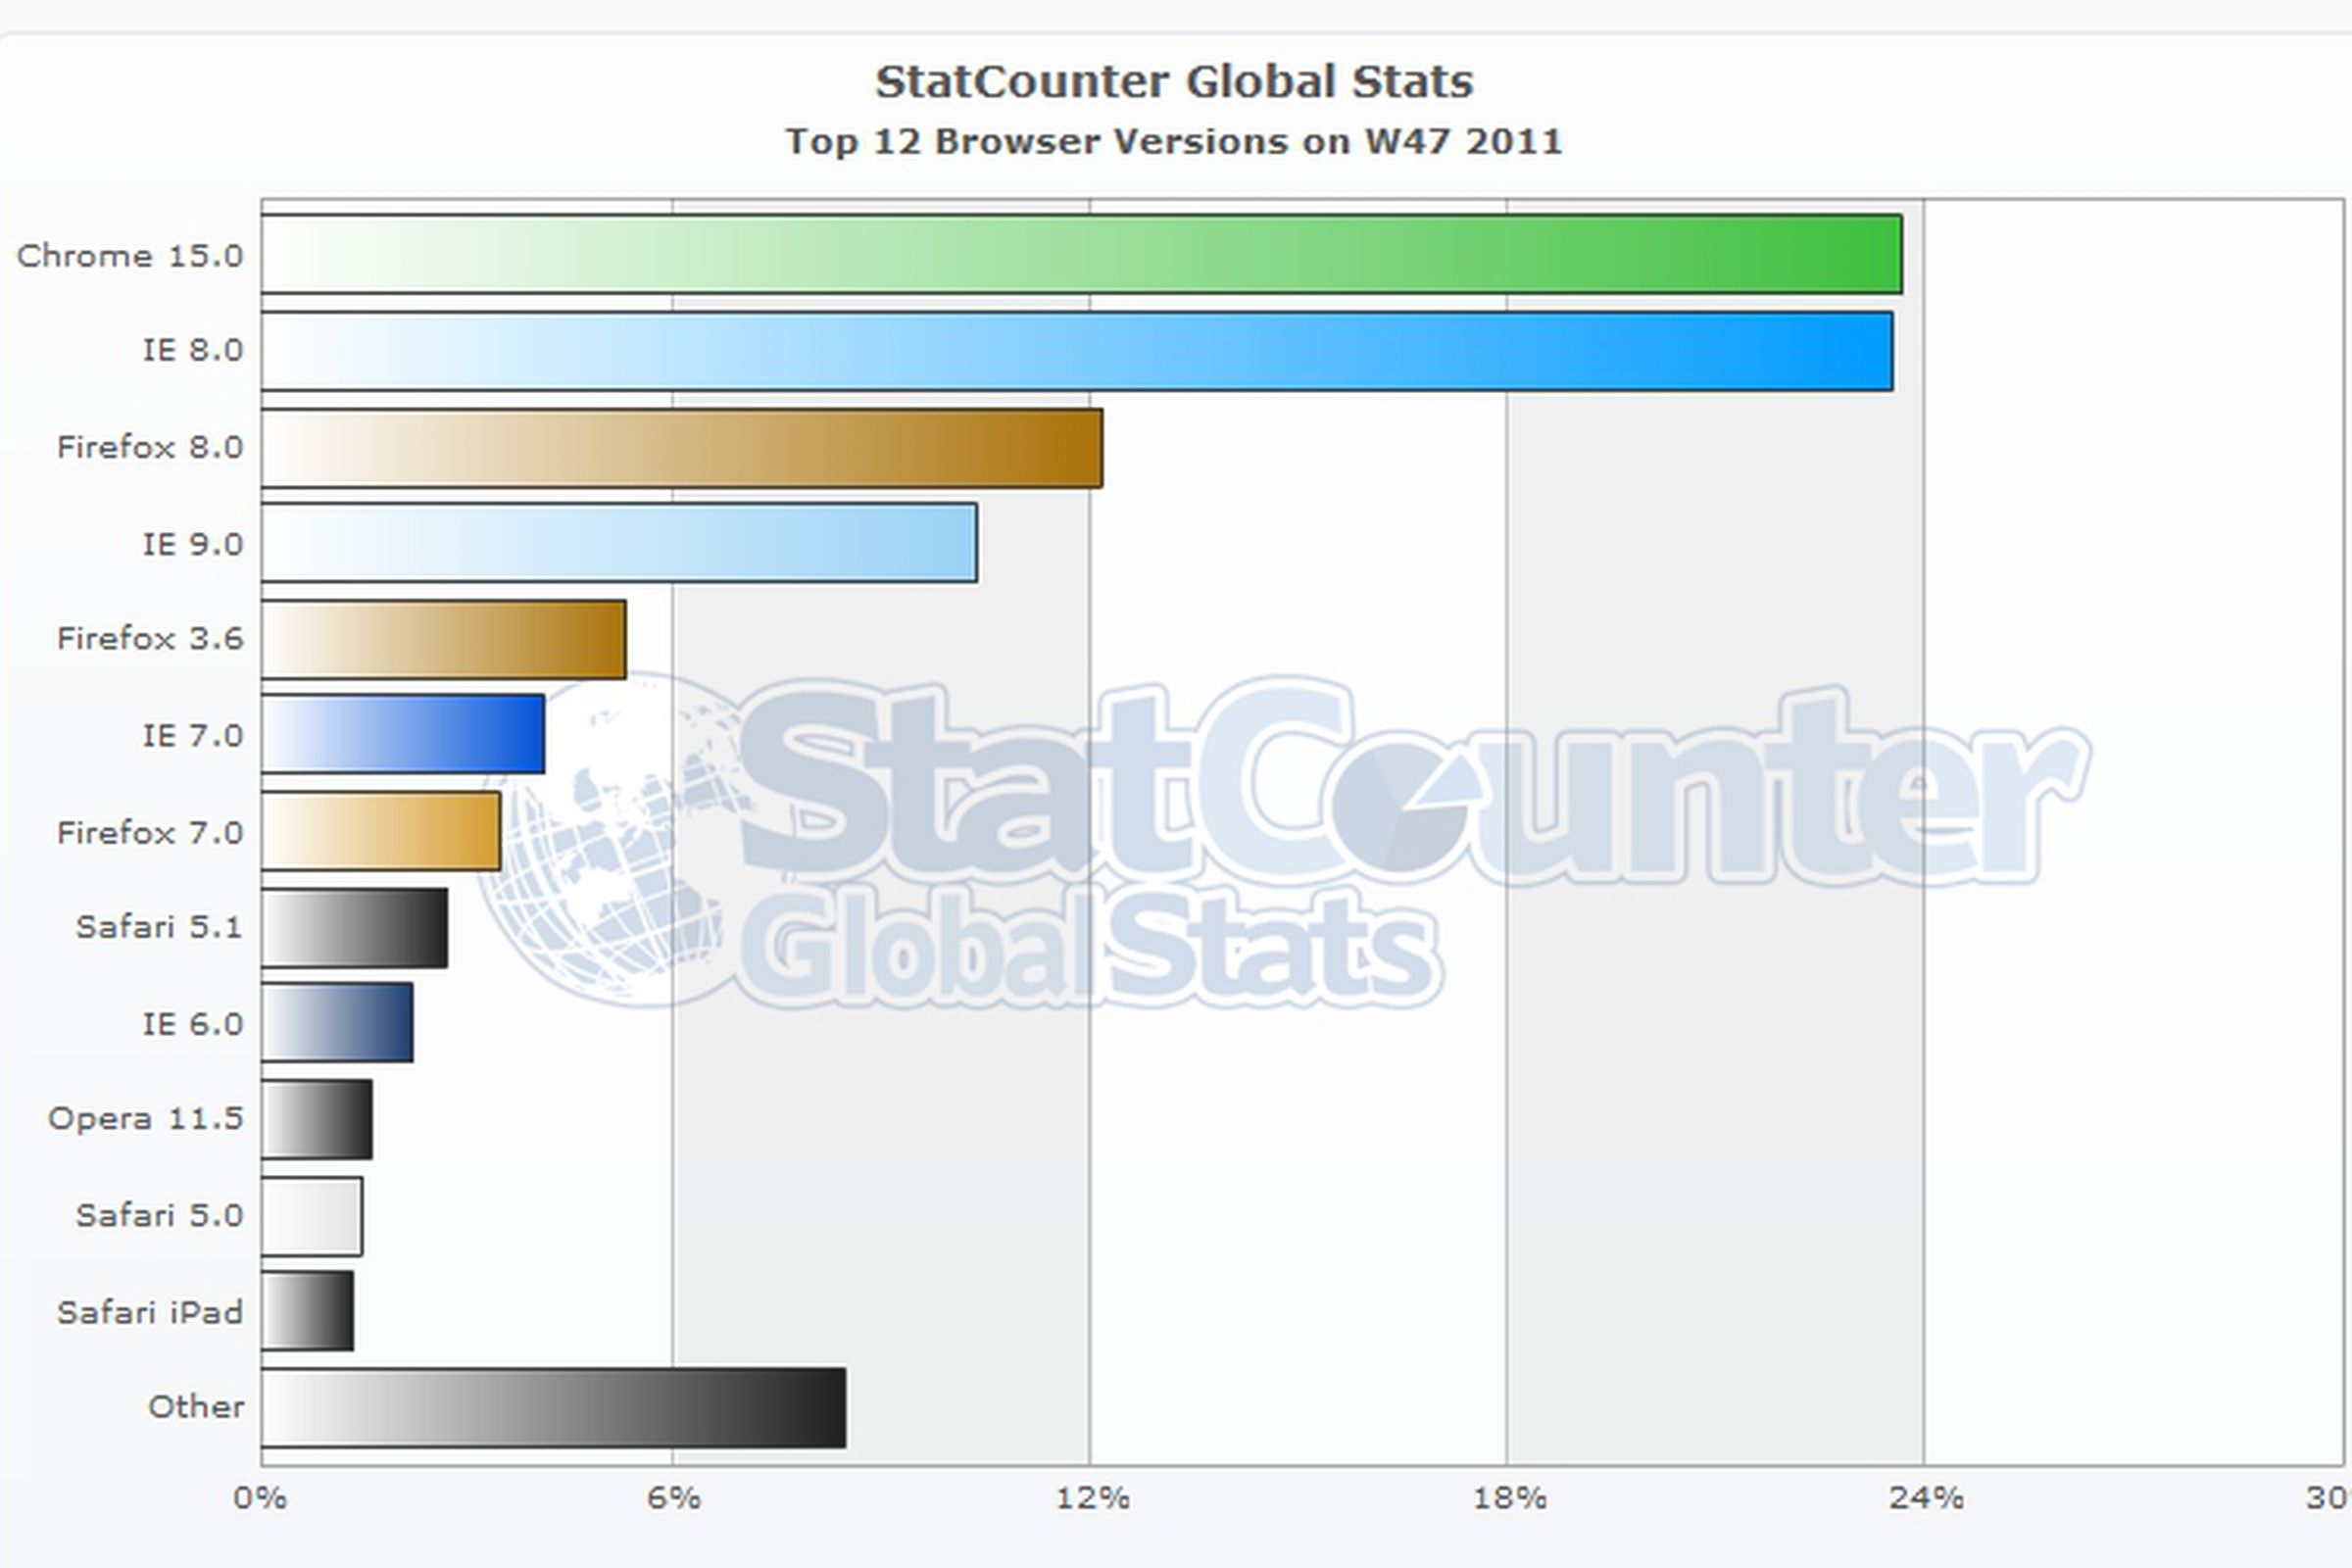 Chrome 15 most popular browser version